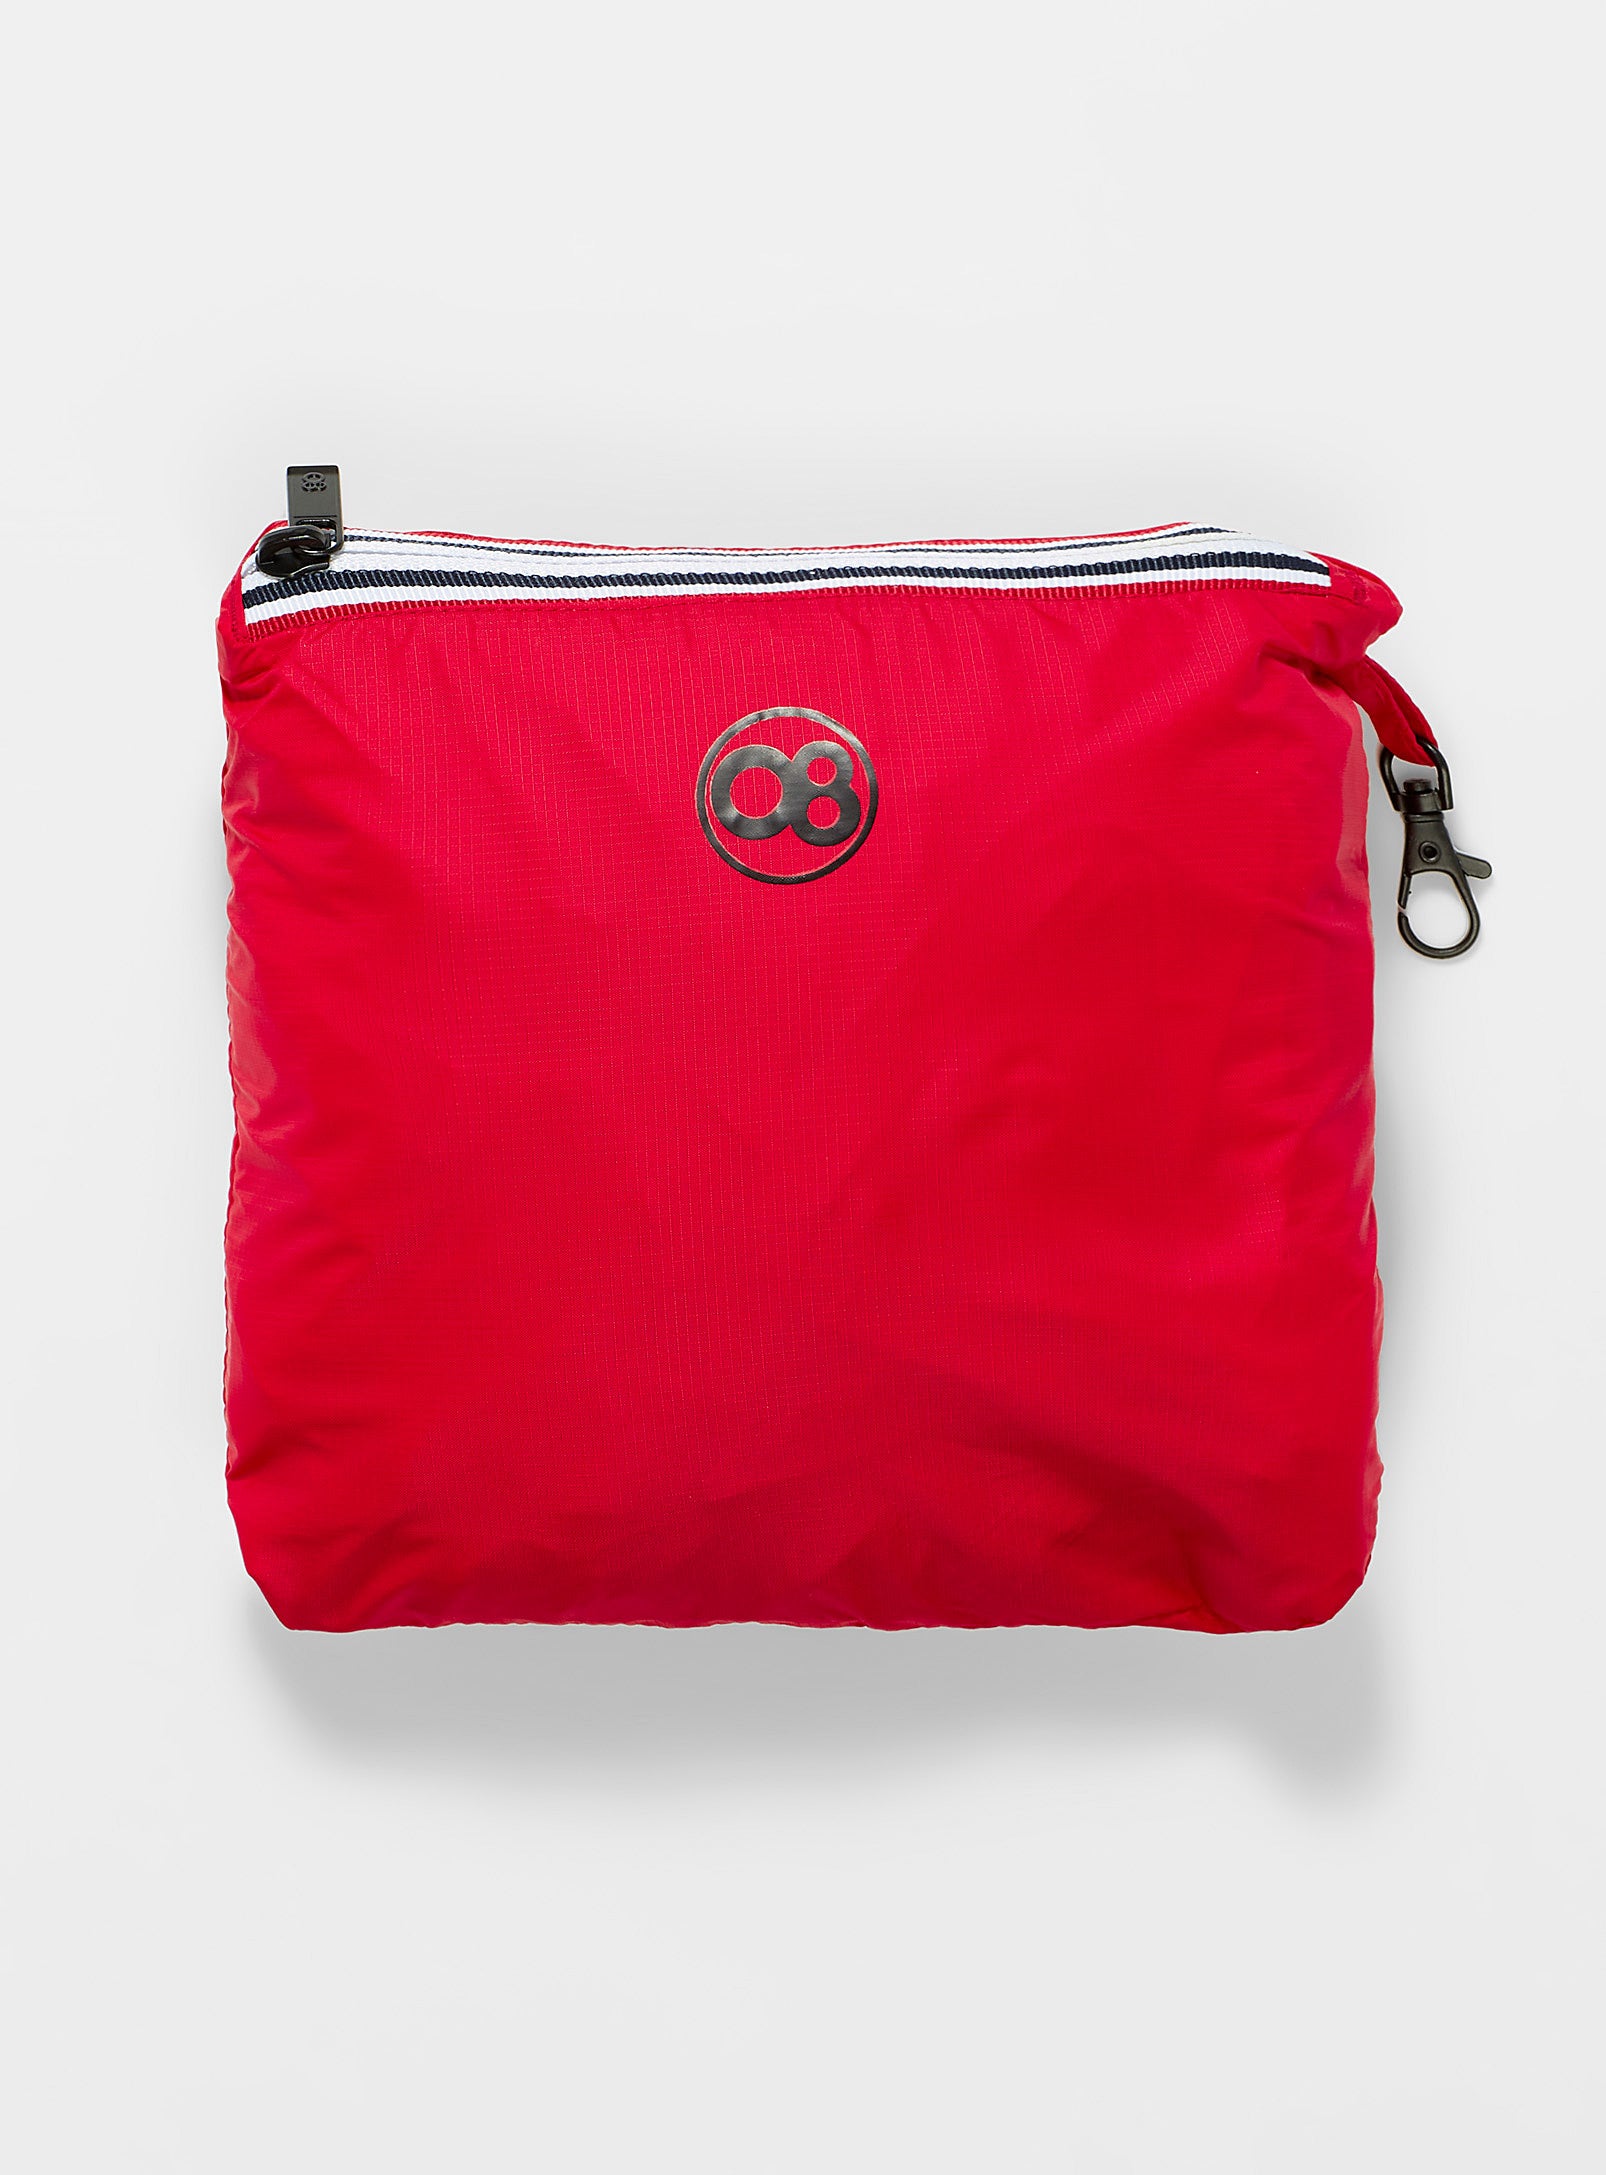 Sloane - Red Full Zip Packable Rain Jacket - O8lifestyle